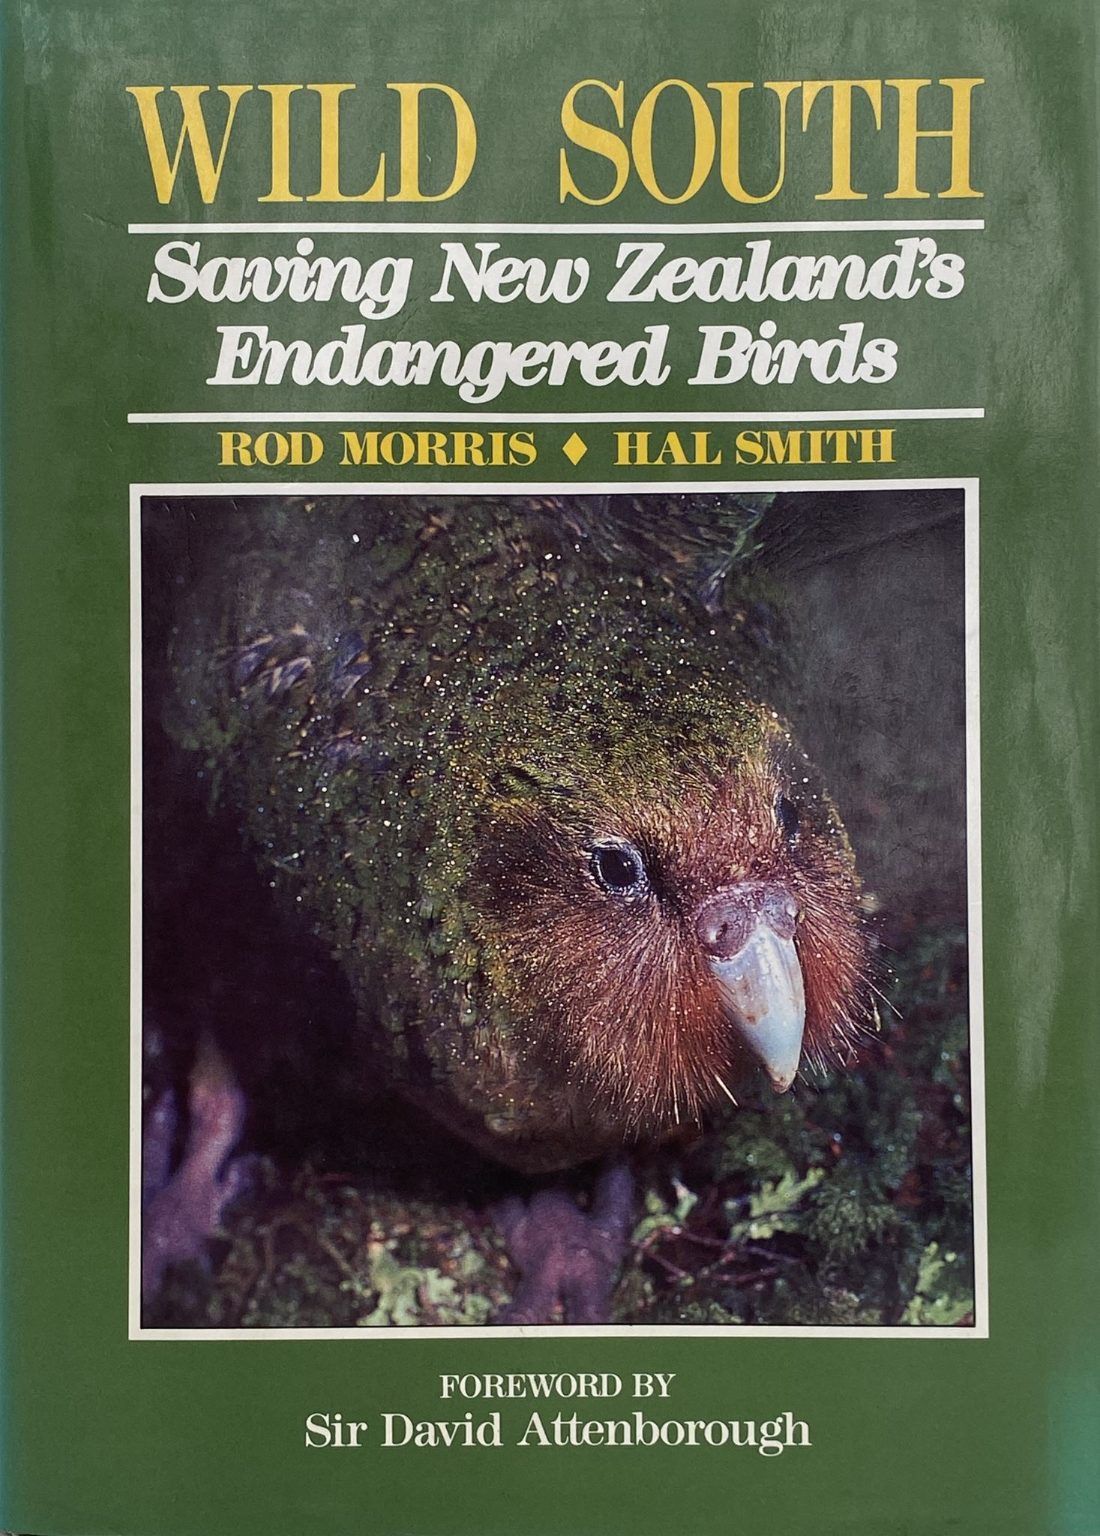 WILD SOUTH: Saving New Zealand's Endangered Birds